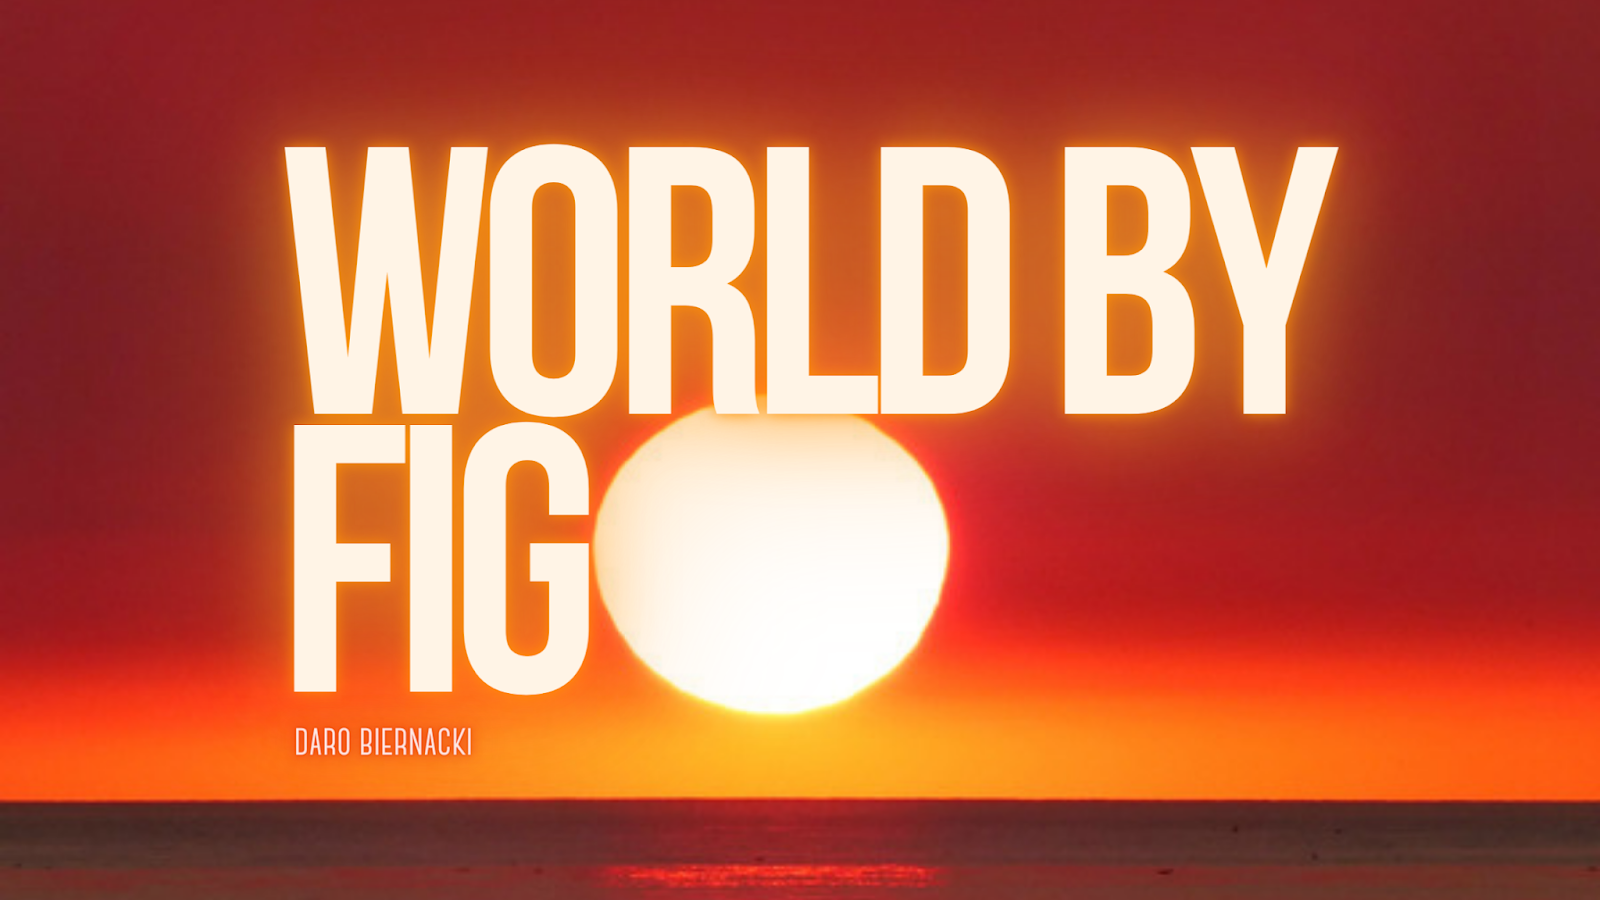 WORLD BY FIGO